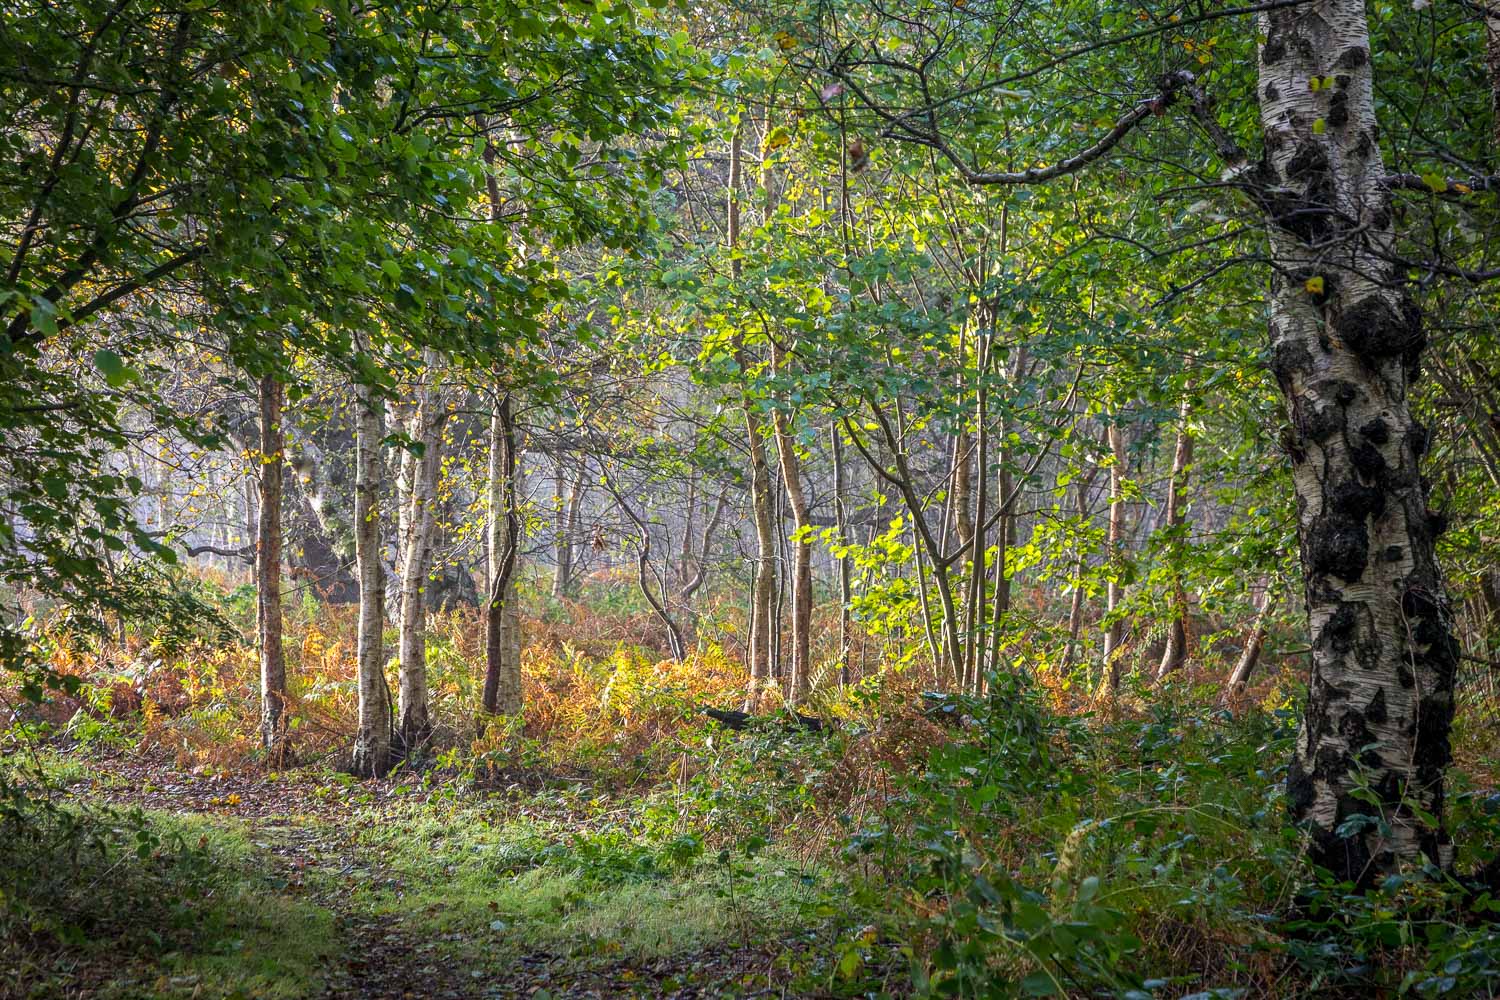 North Cliffe Wood, autumn